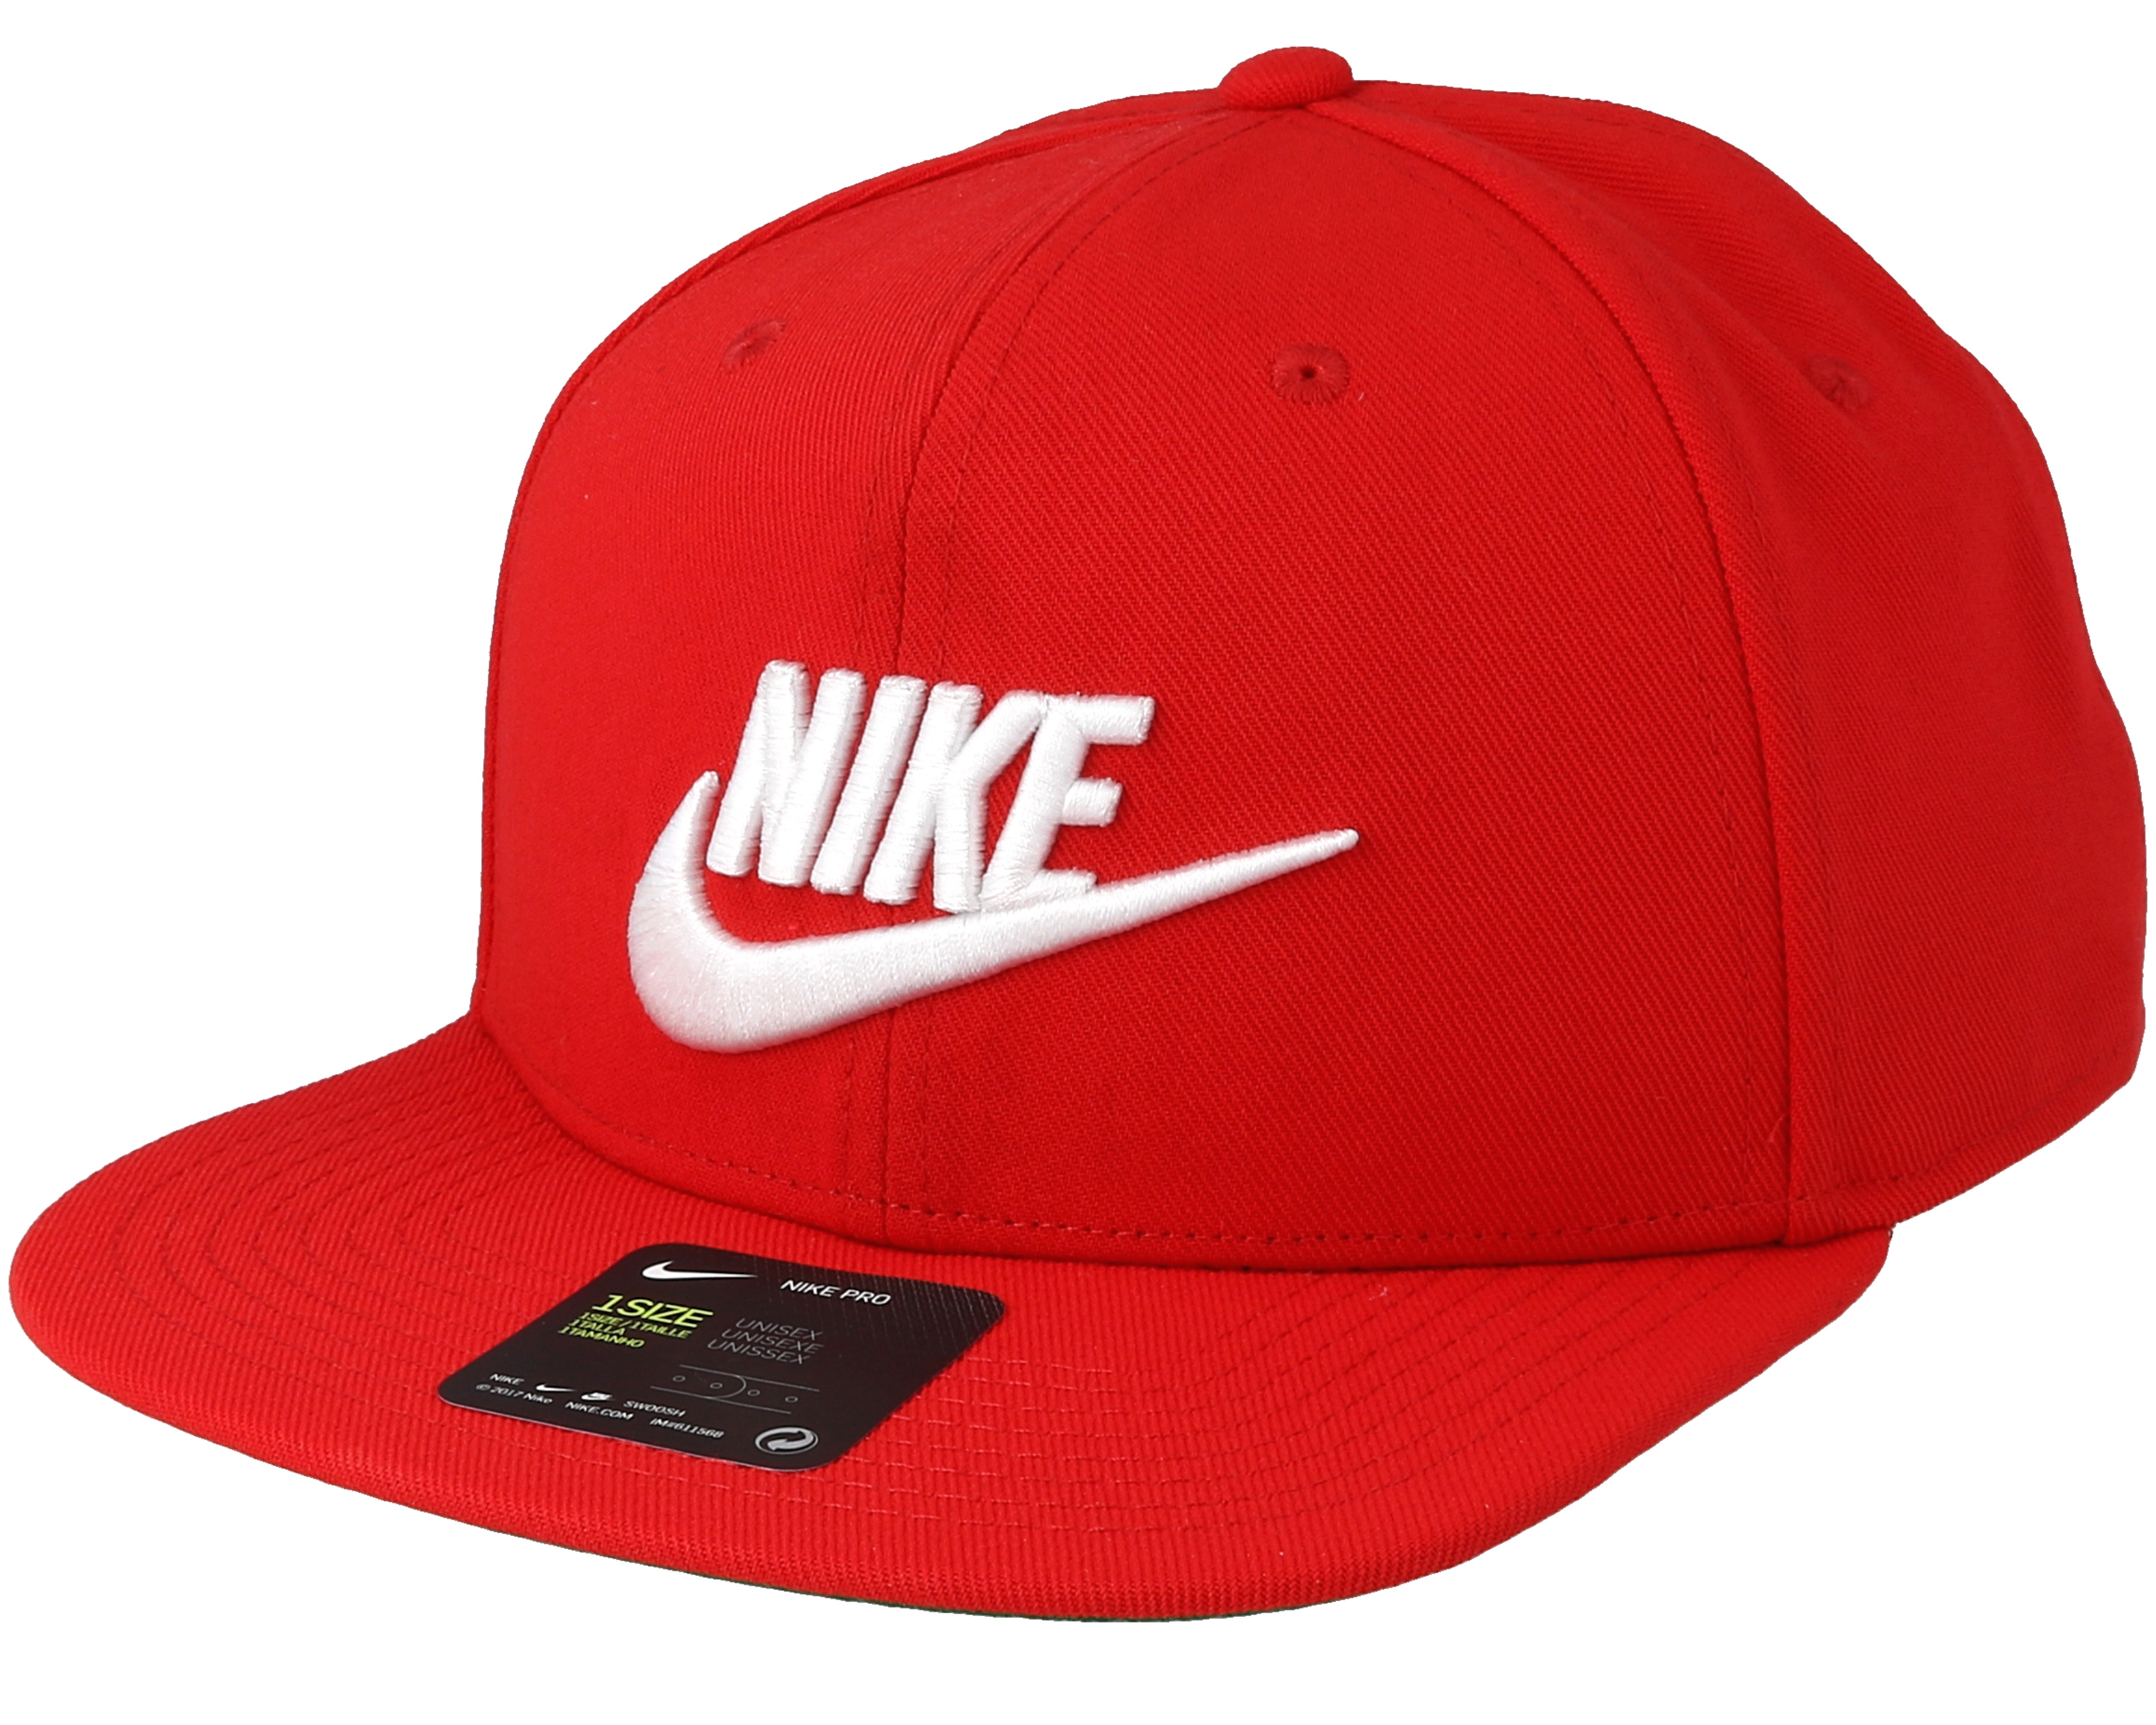 Mens Futura Pro Red Snapback - Nike cap